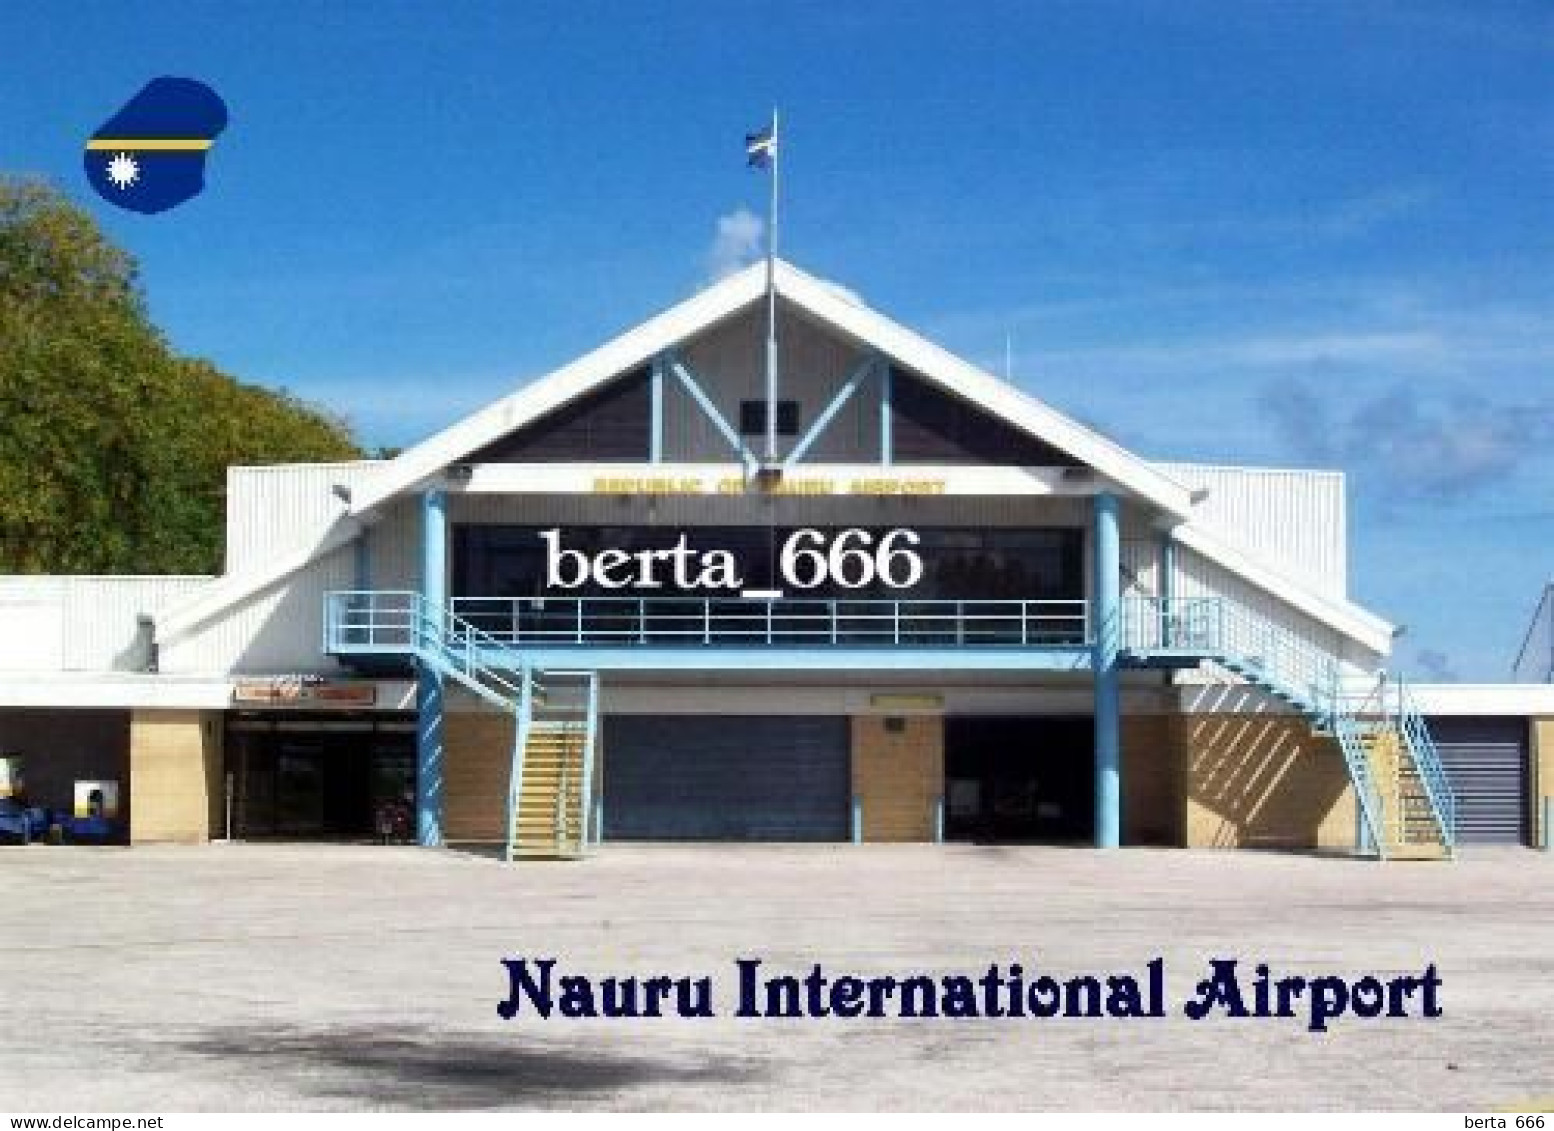 Nauru International Airport New Postcard - Nauru